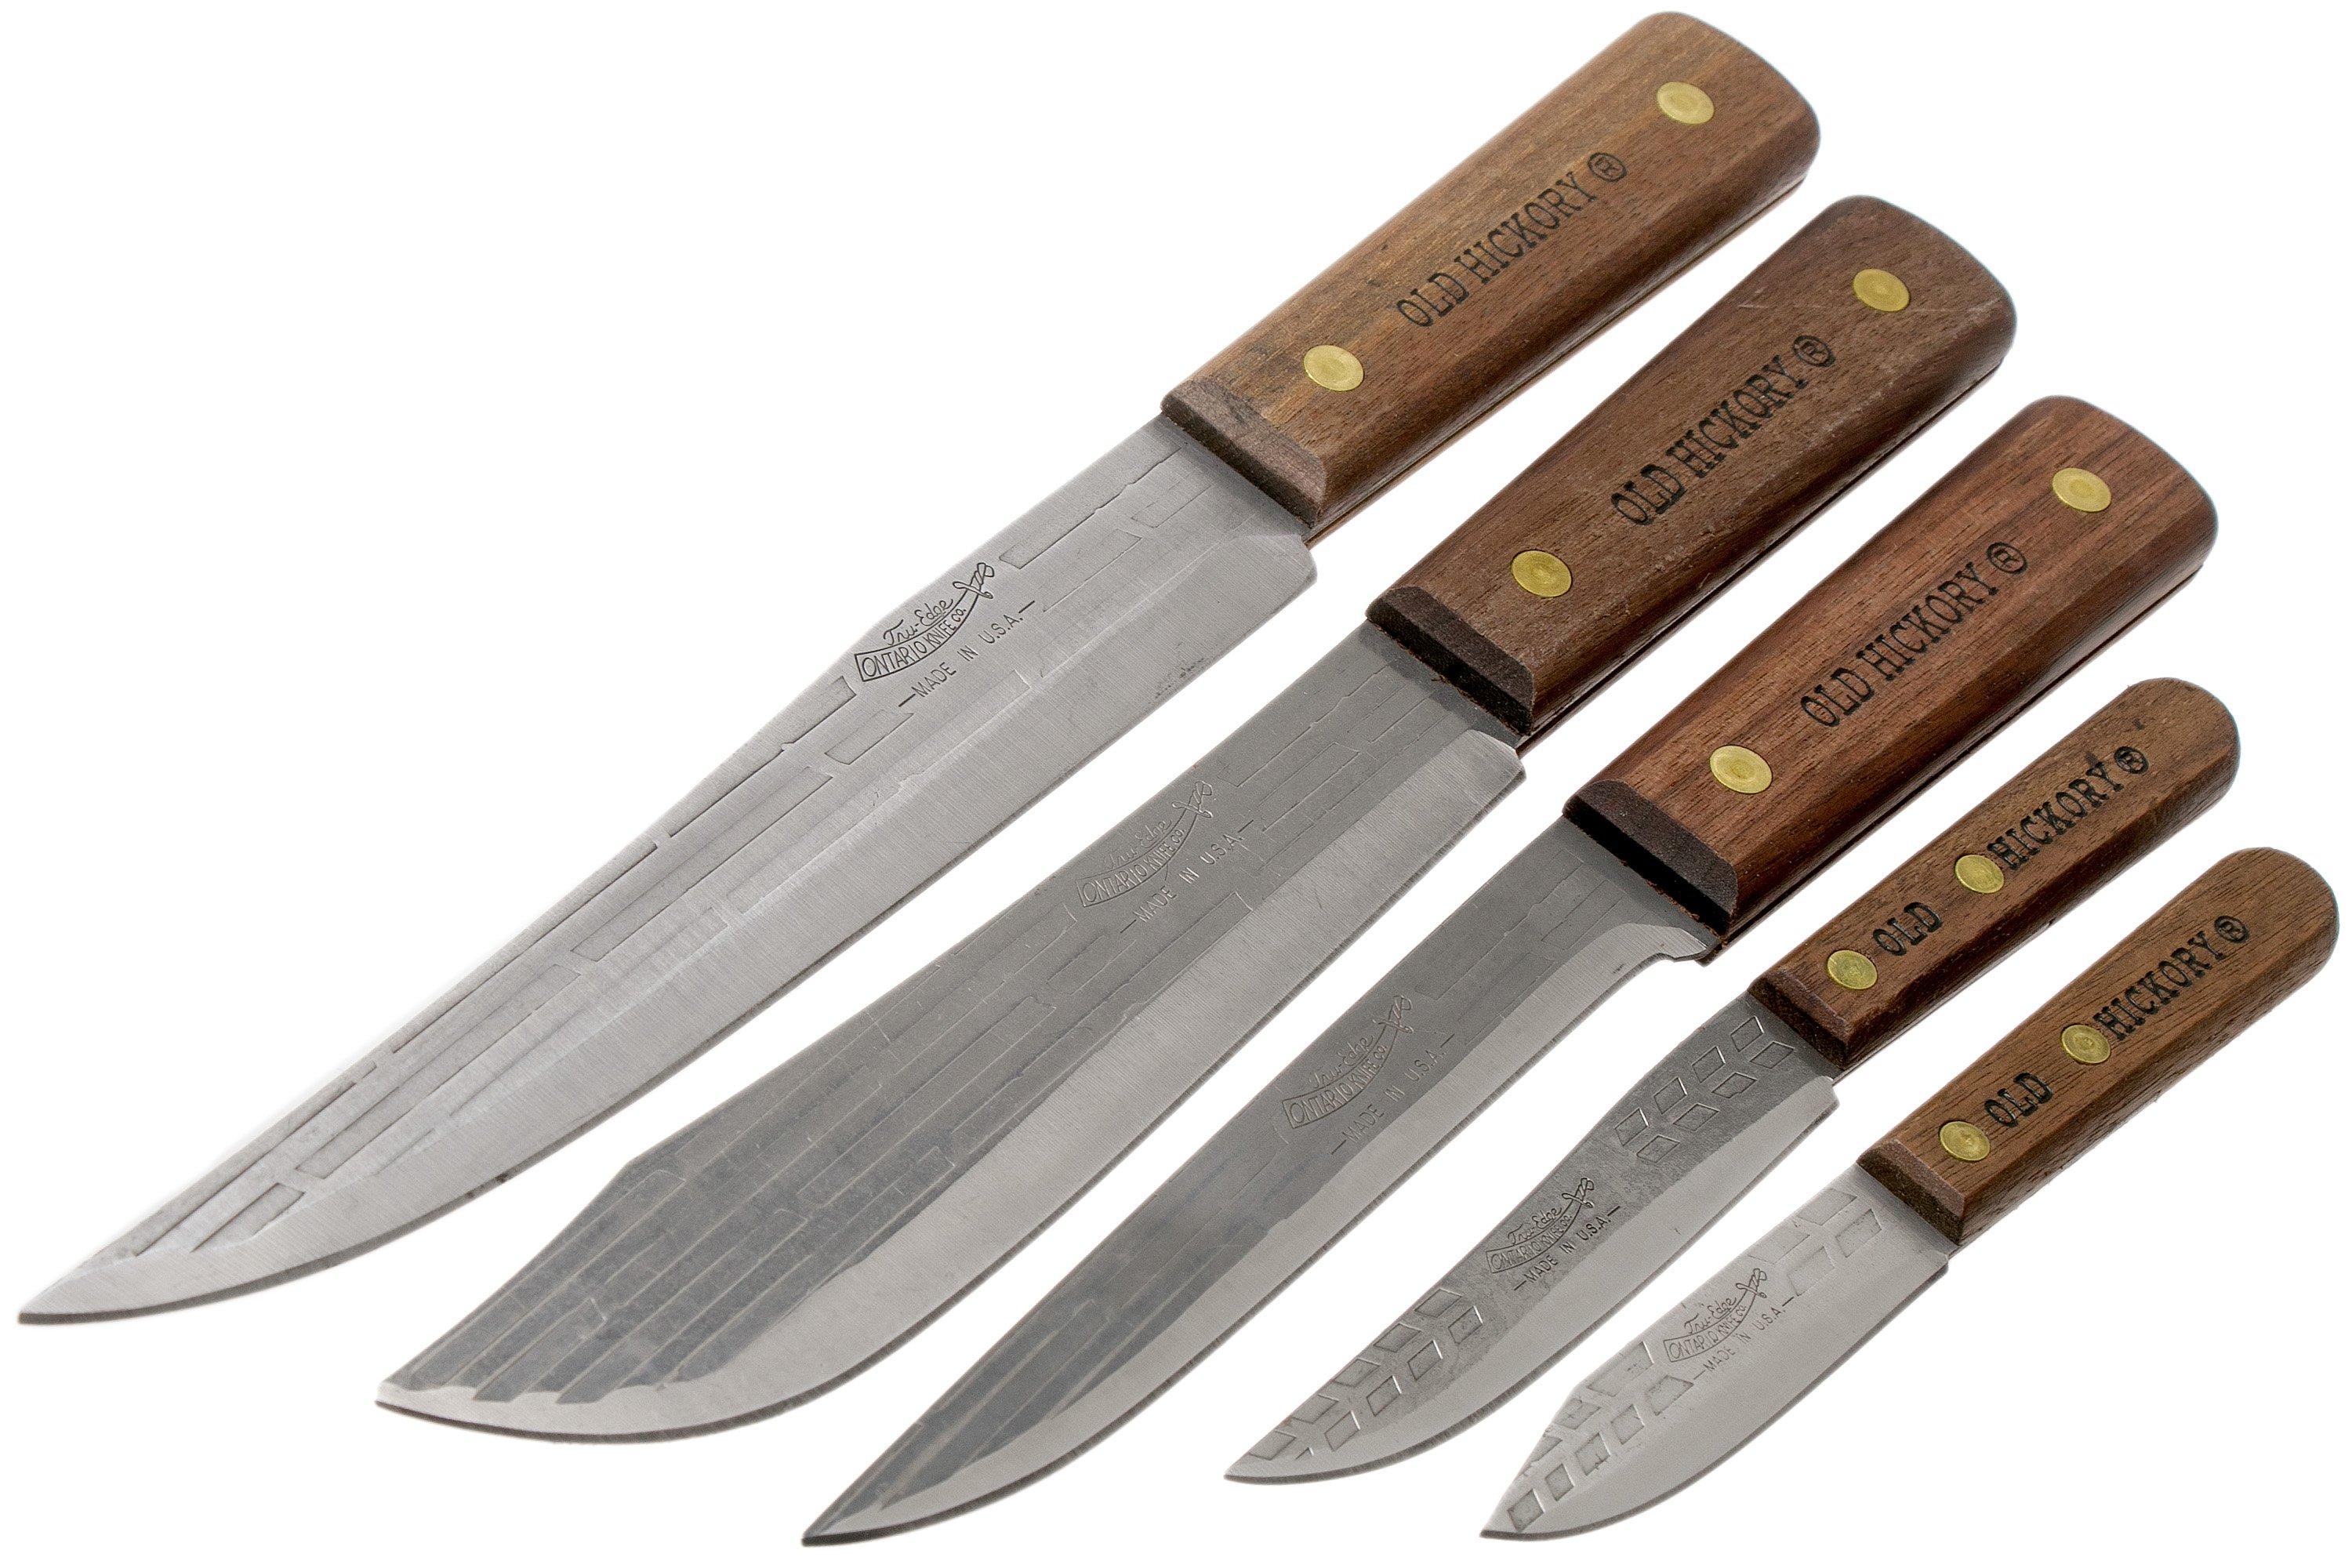 Ontario Knife Company Old Hickory 5 Piece Block Set